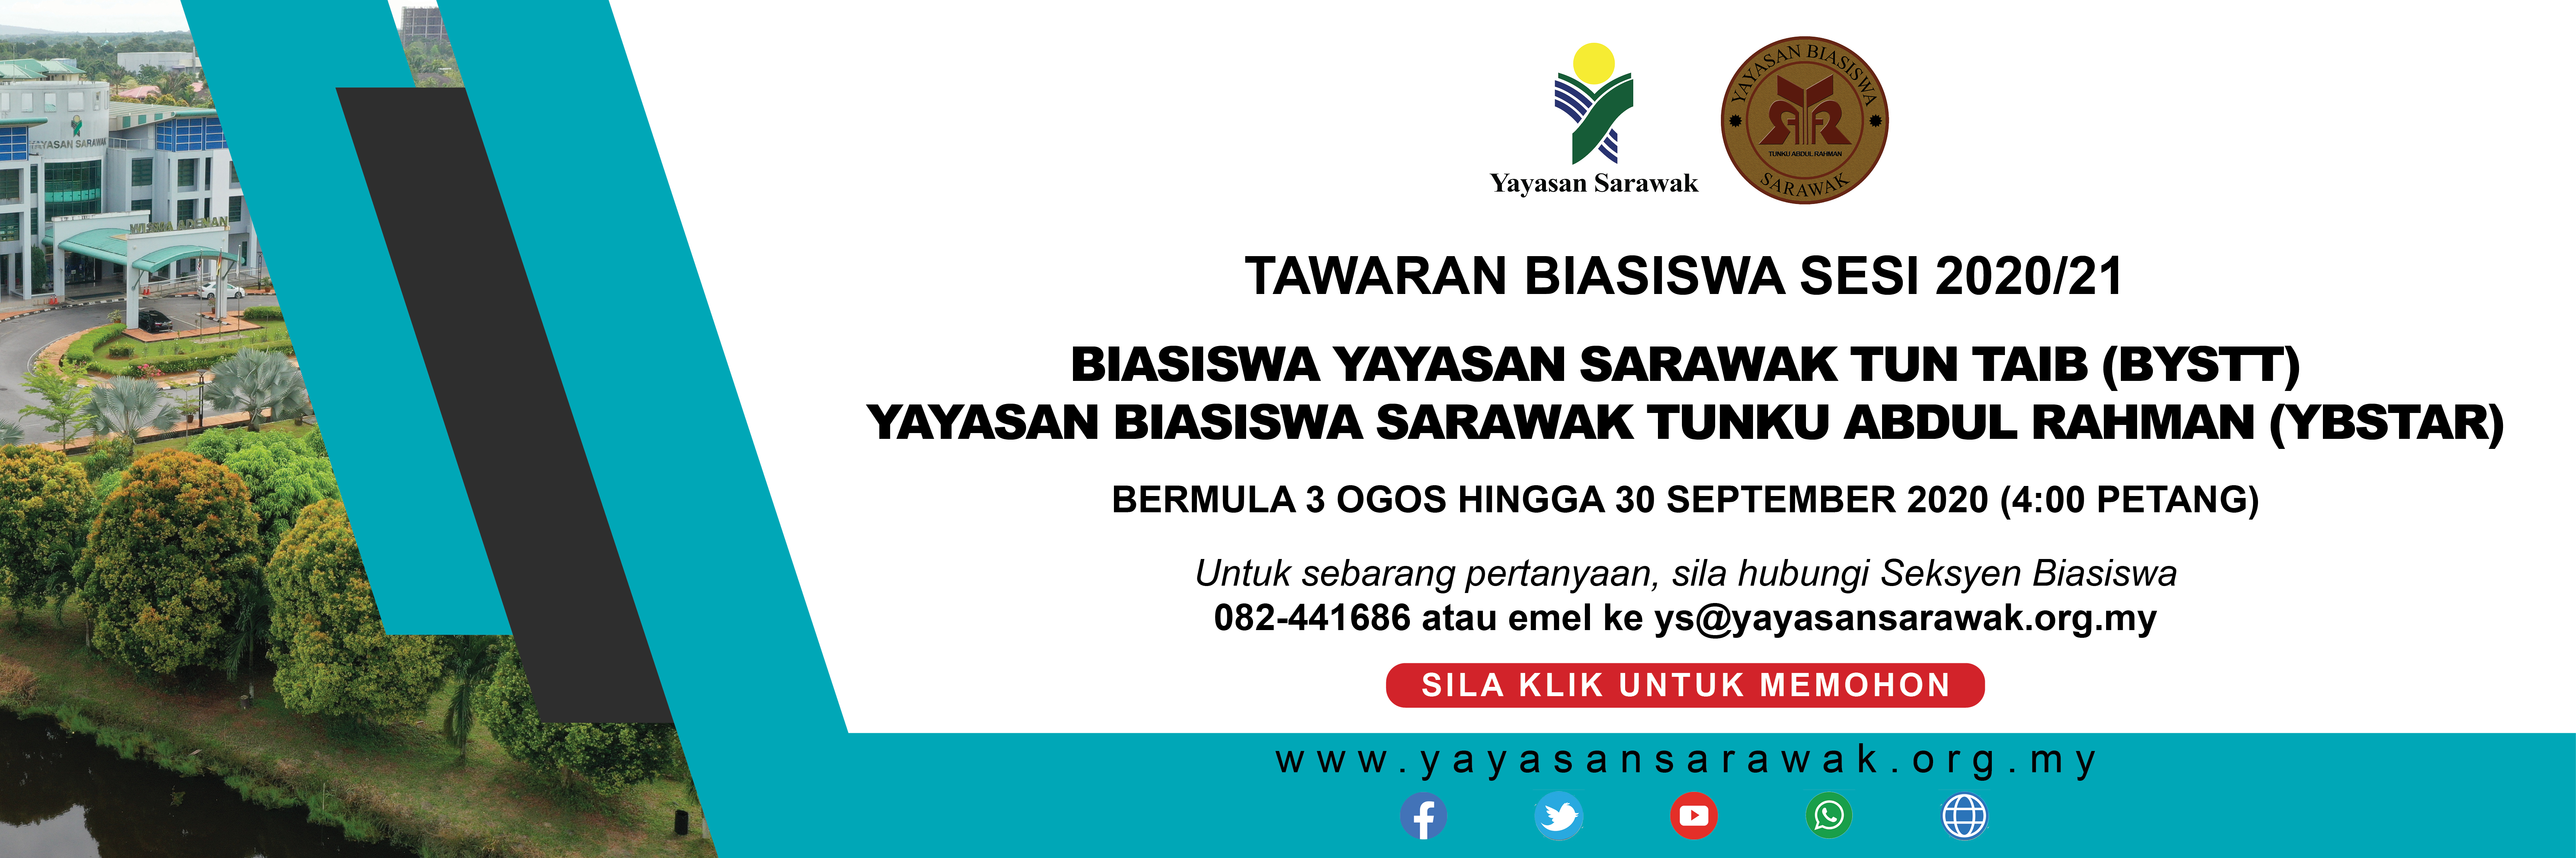 Tawaran Biasiswa Bagi Sesi 2020 2021 Yayasan Sarawak